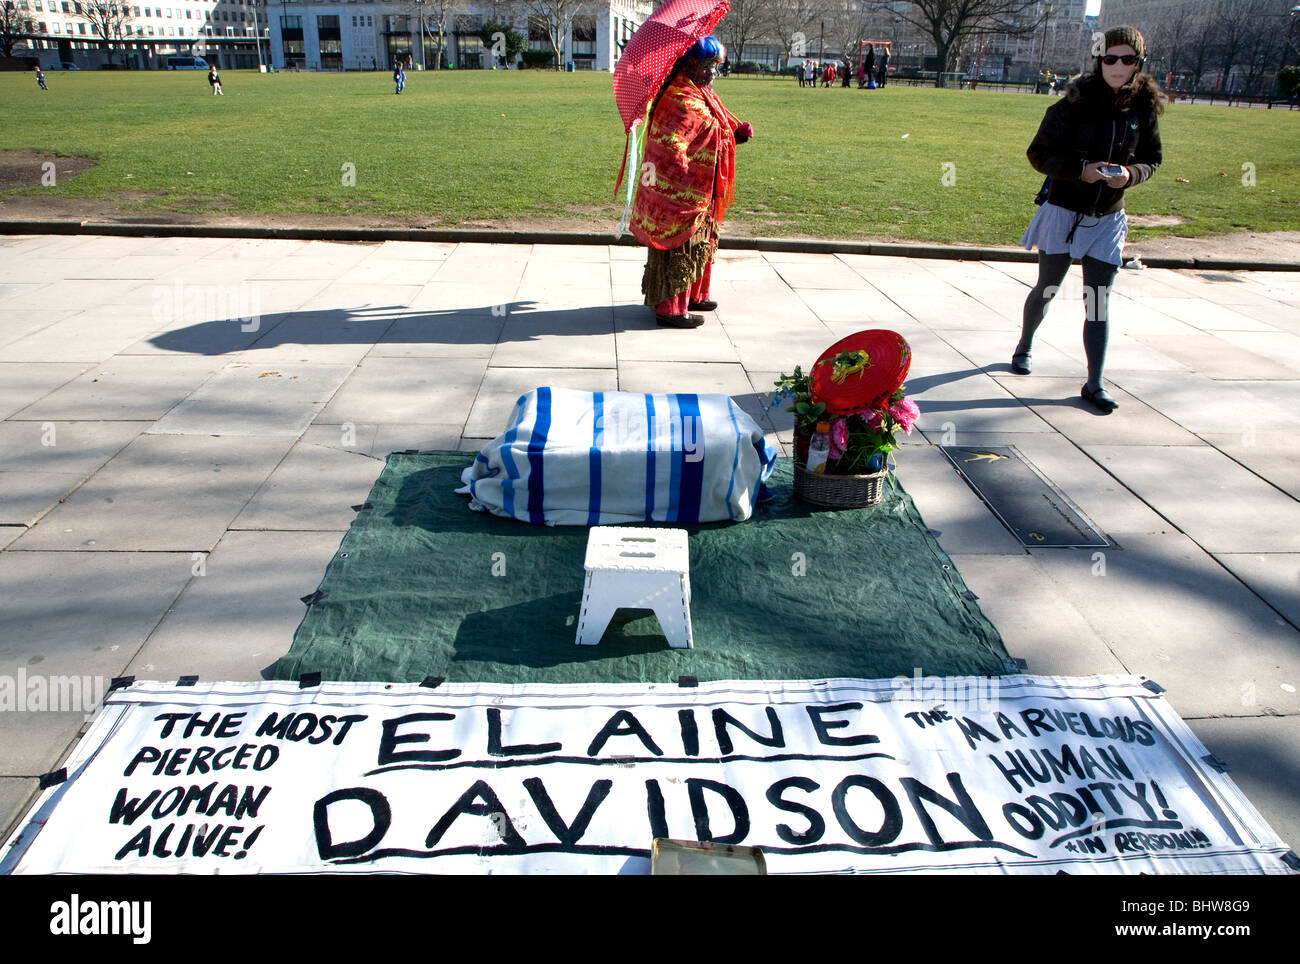 Elaine Davidson, most pierced woman alive, London Stock Photo